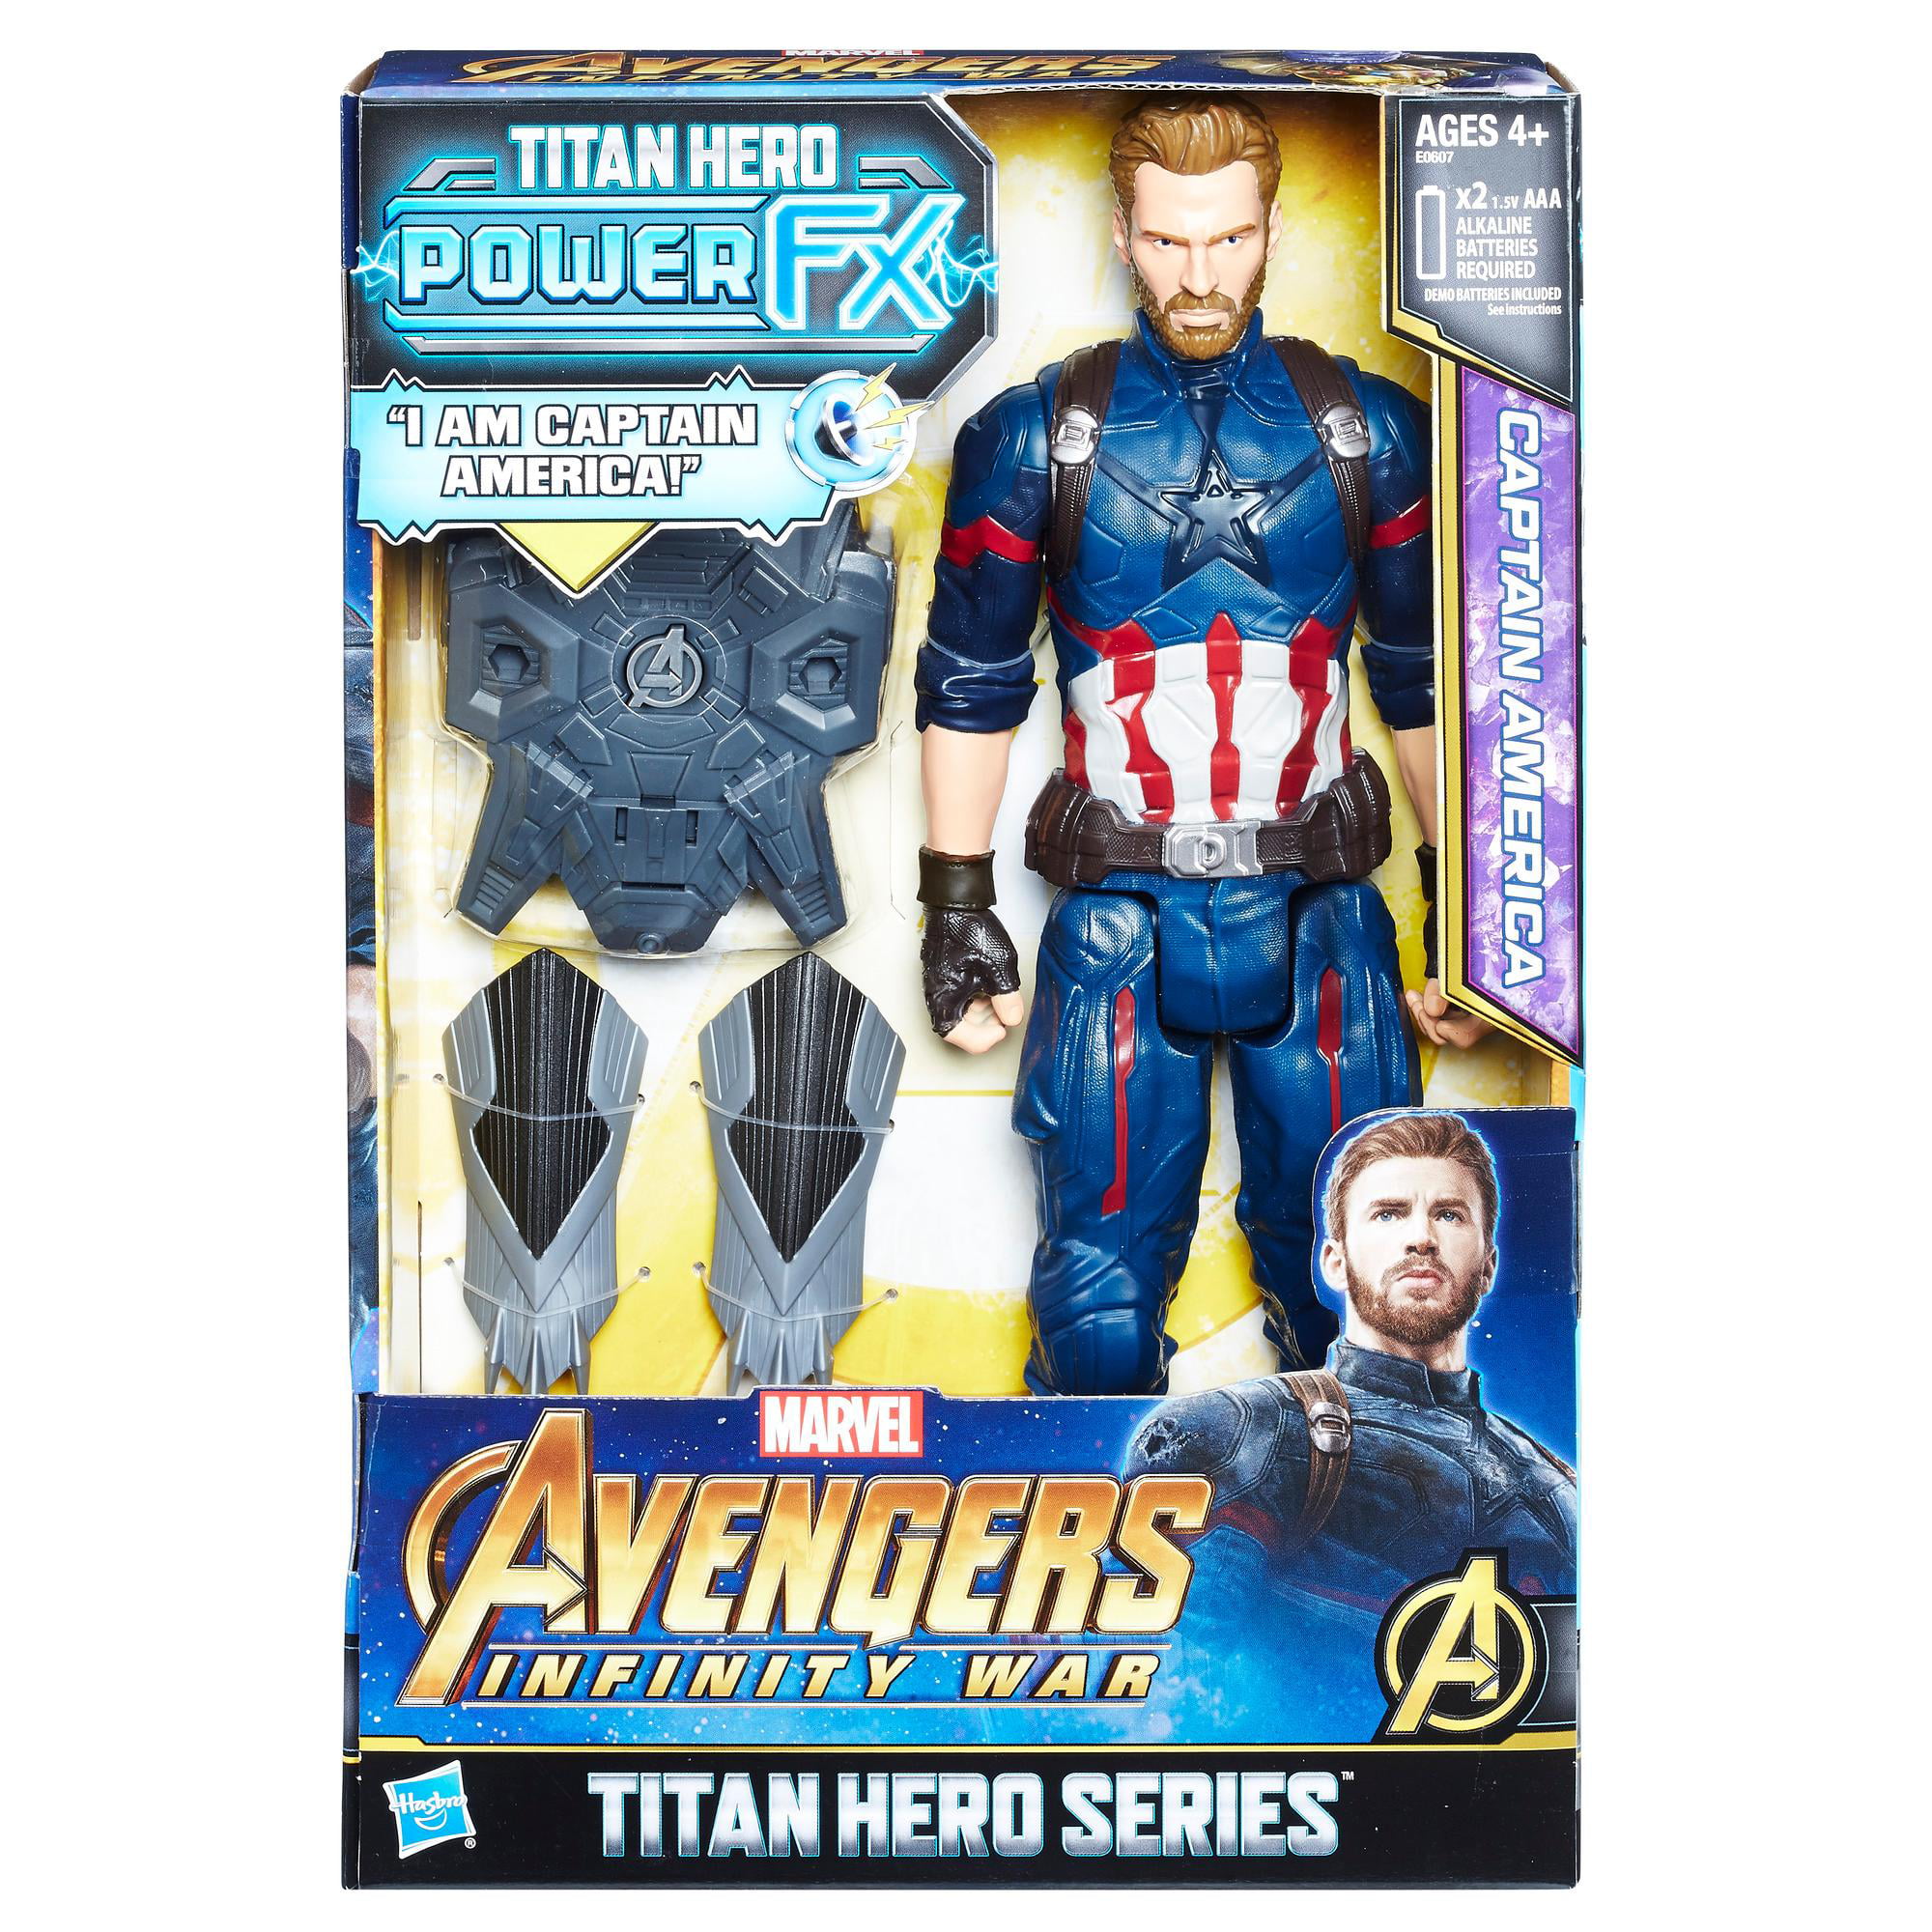 Marvel Infinity War Titan Hero Series Hulk with Titan Hero Power FX Port 